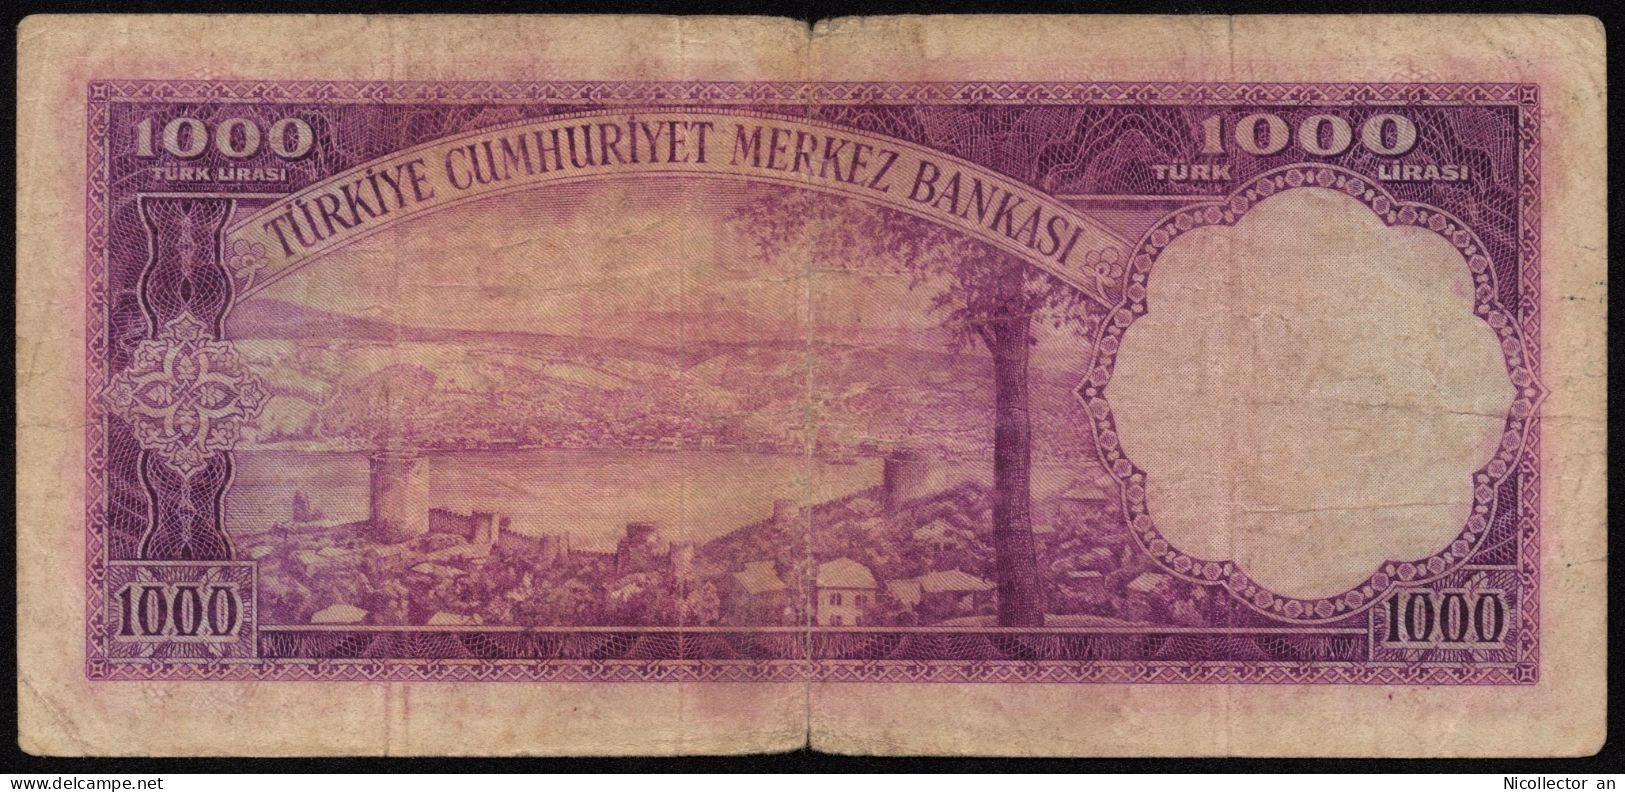 Turkey, 1.000 Lira, 1953, P-172, FINE Rare Banknote - Türkei